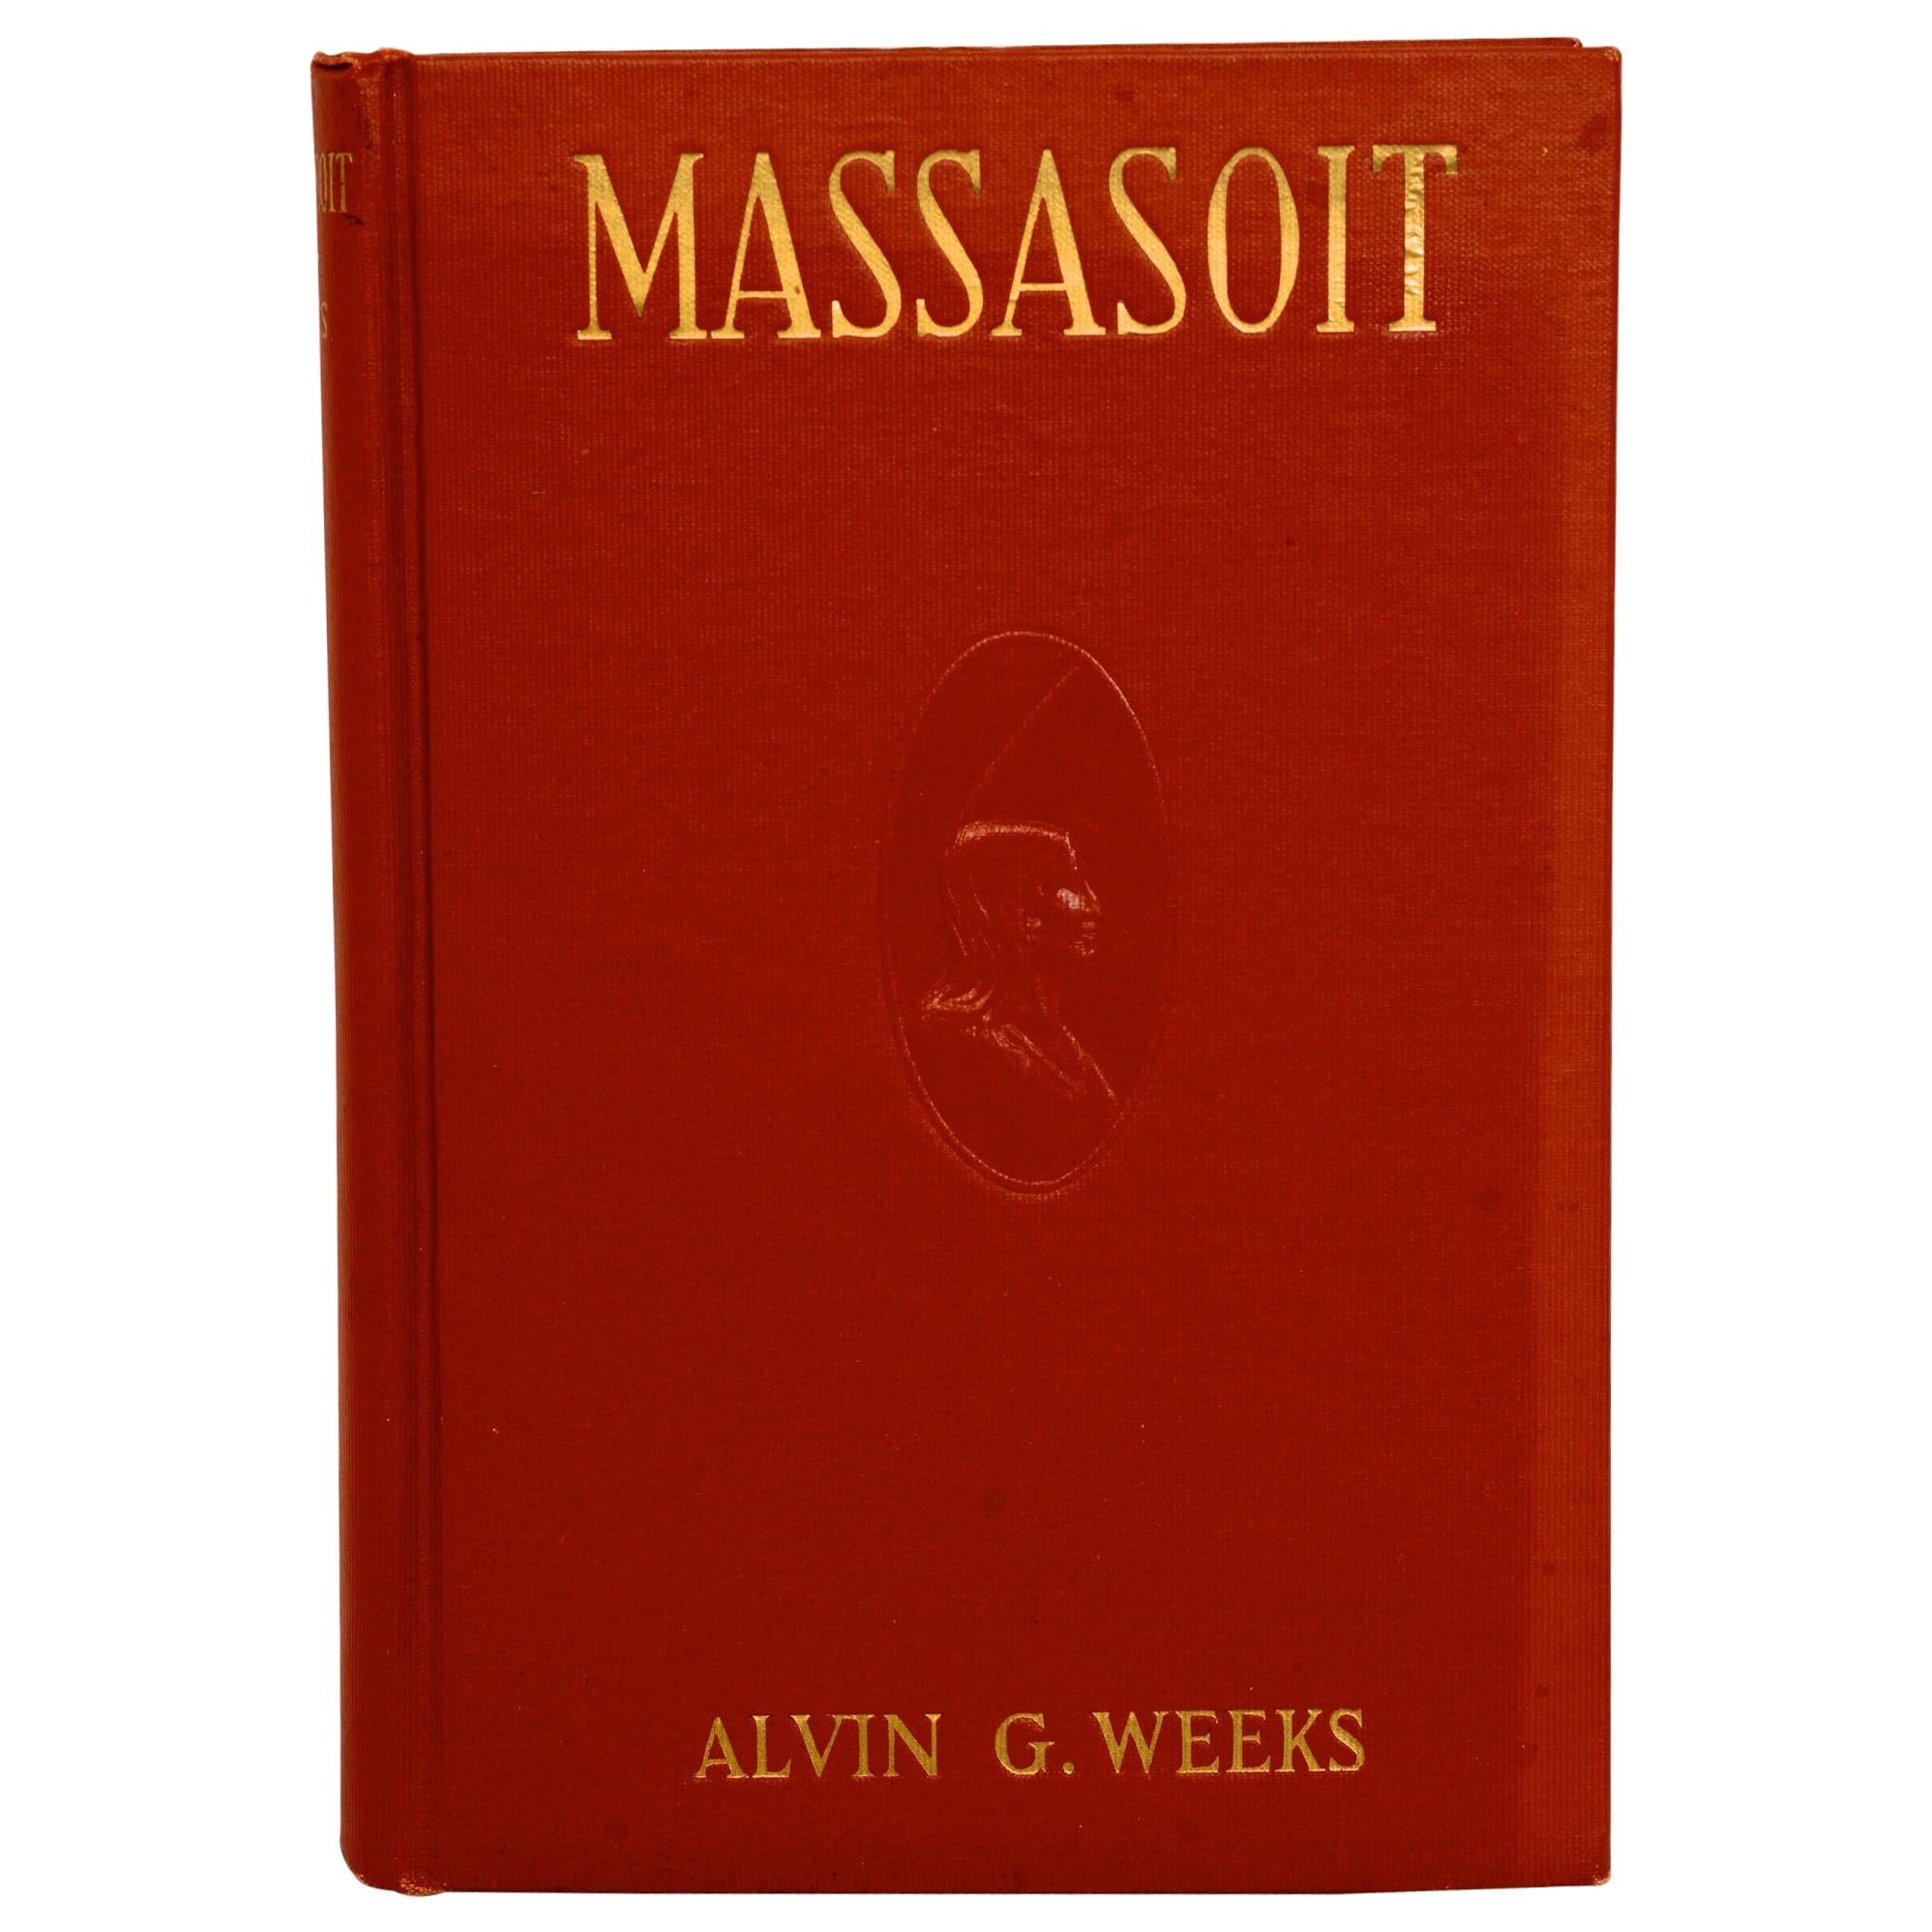 Massasoit of the Wampanoags by Alvin G. Weeks